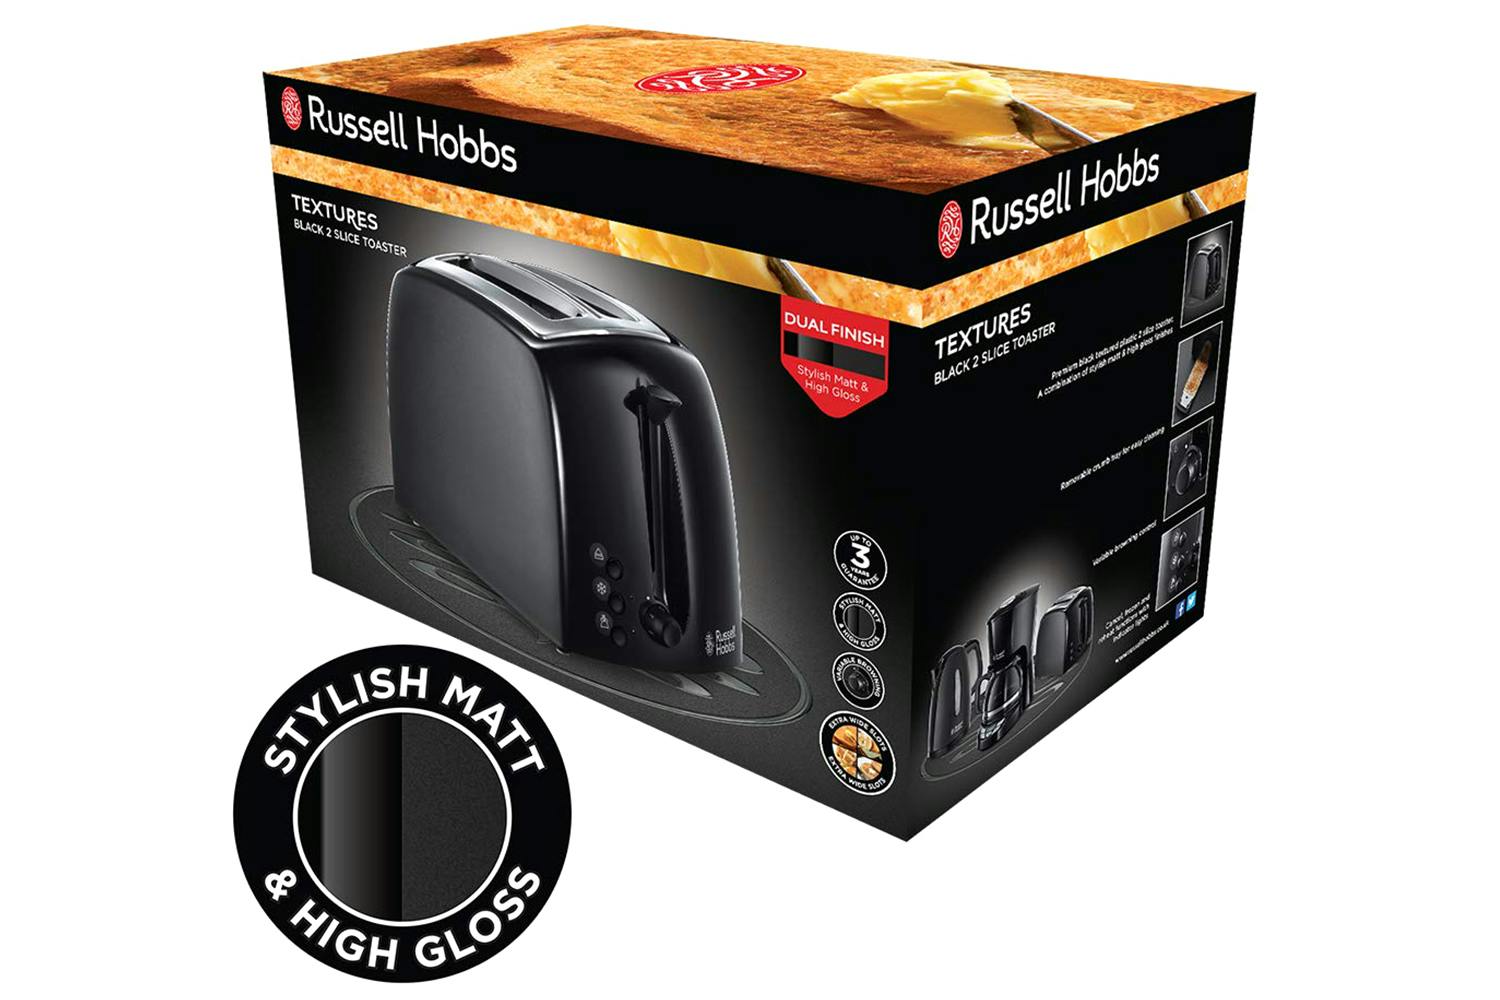 Russell Hobbs Textures 2 Slice Toaster, 21641, Black